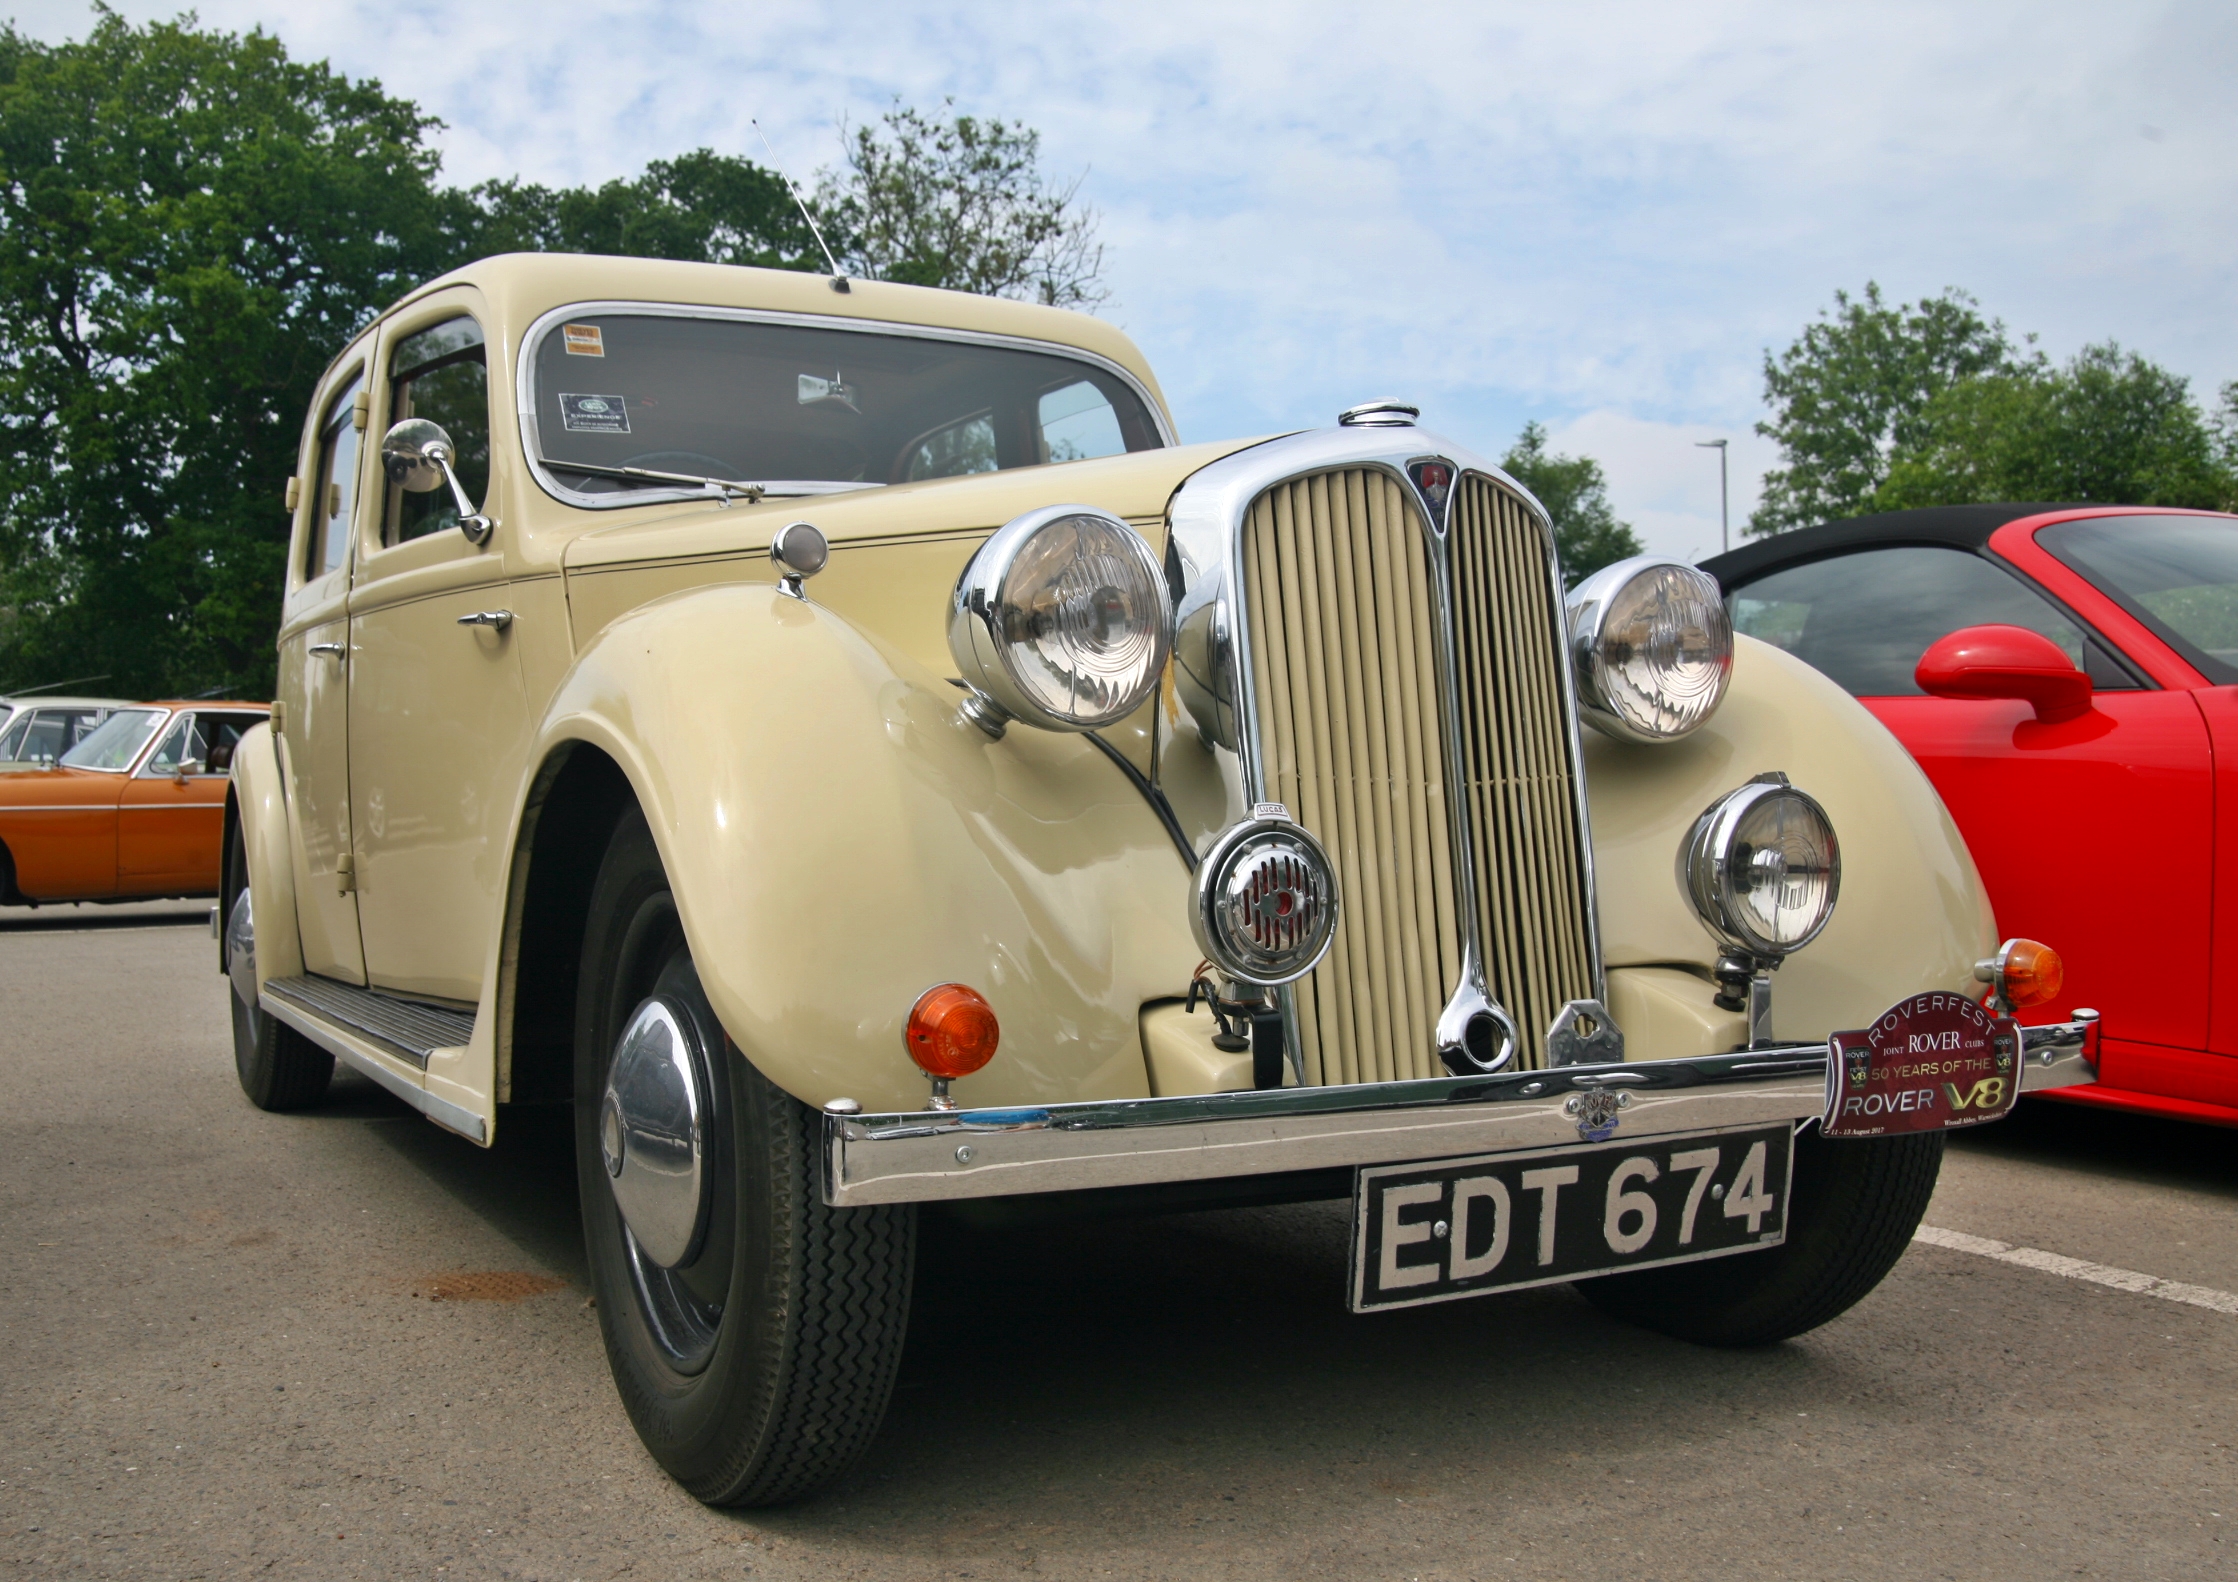 1947 Rover 12 Evoke Classics classic cars auction online